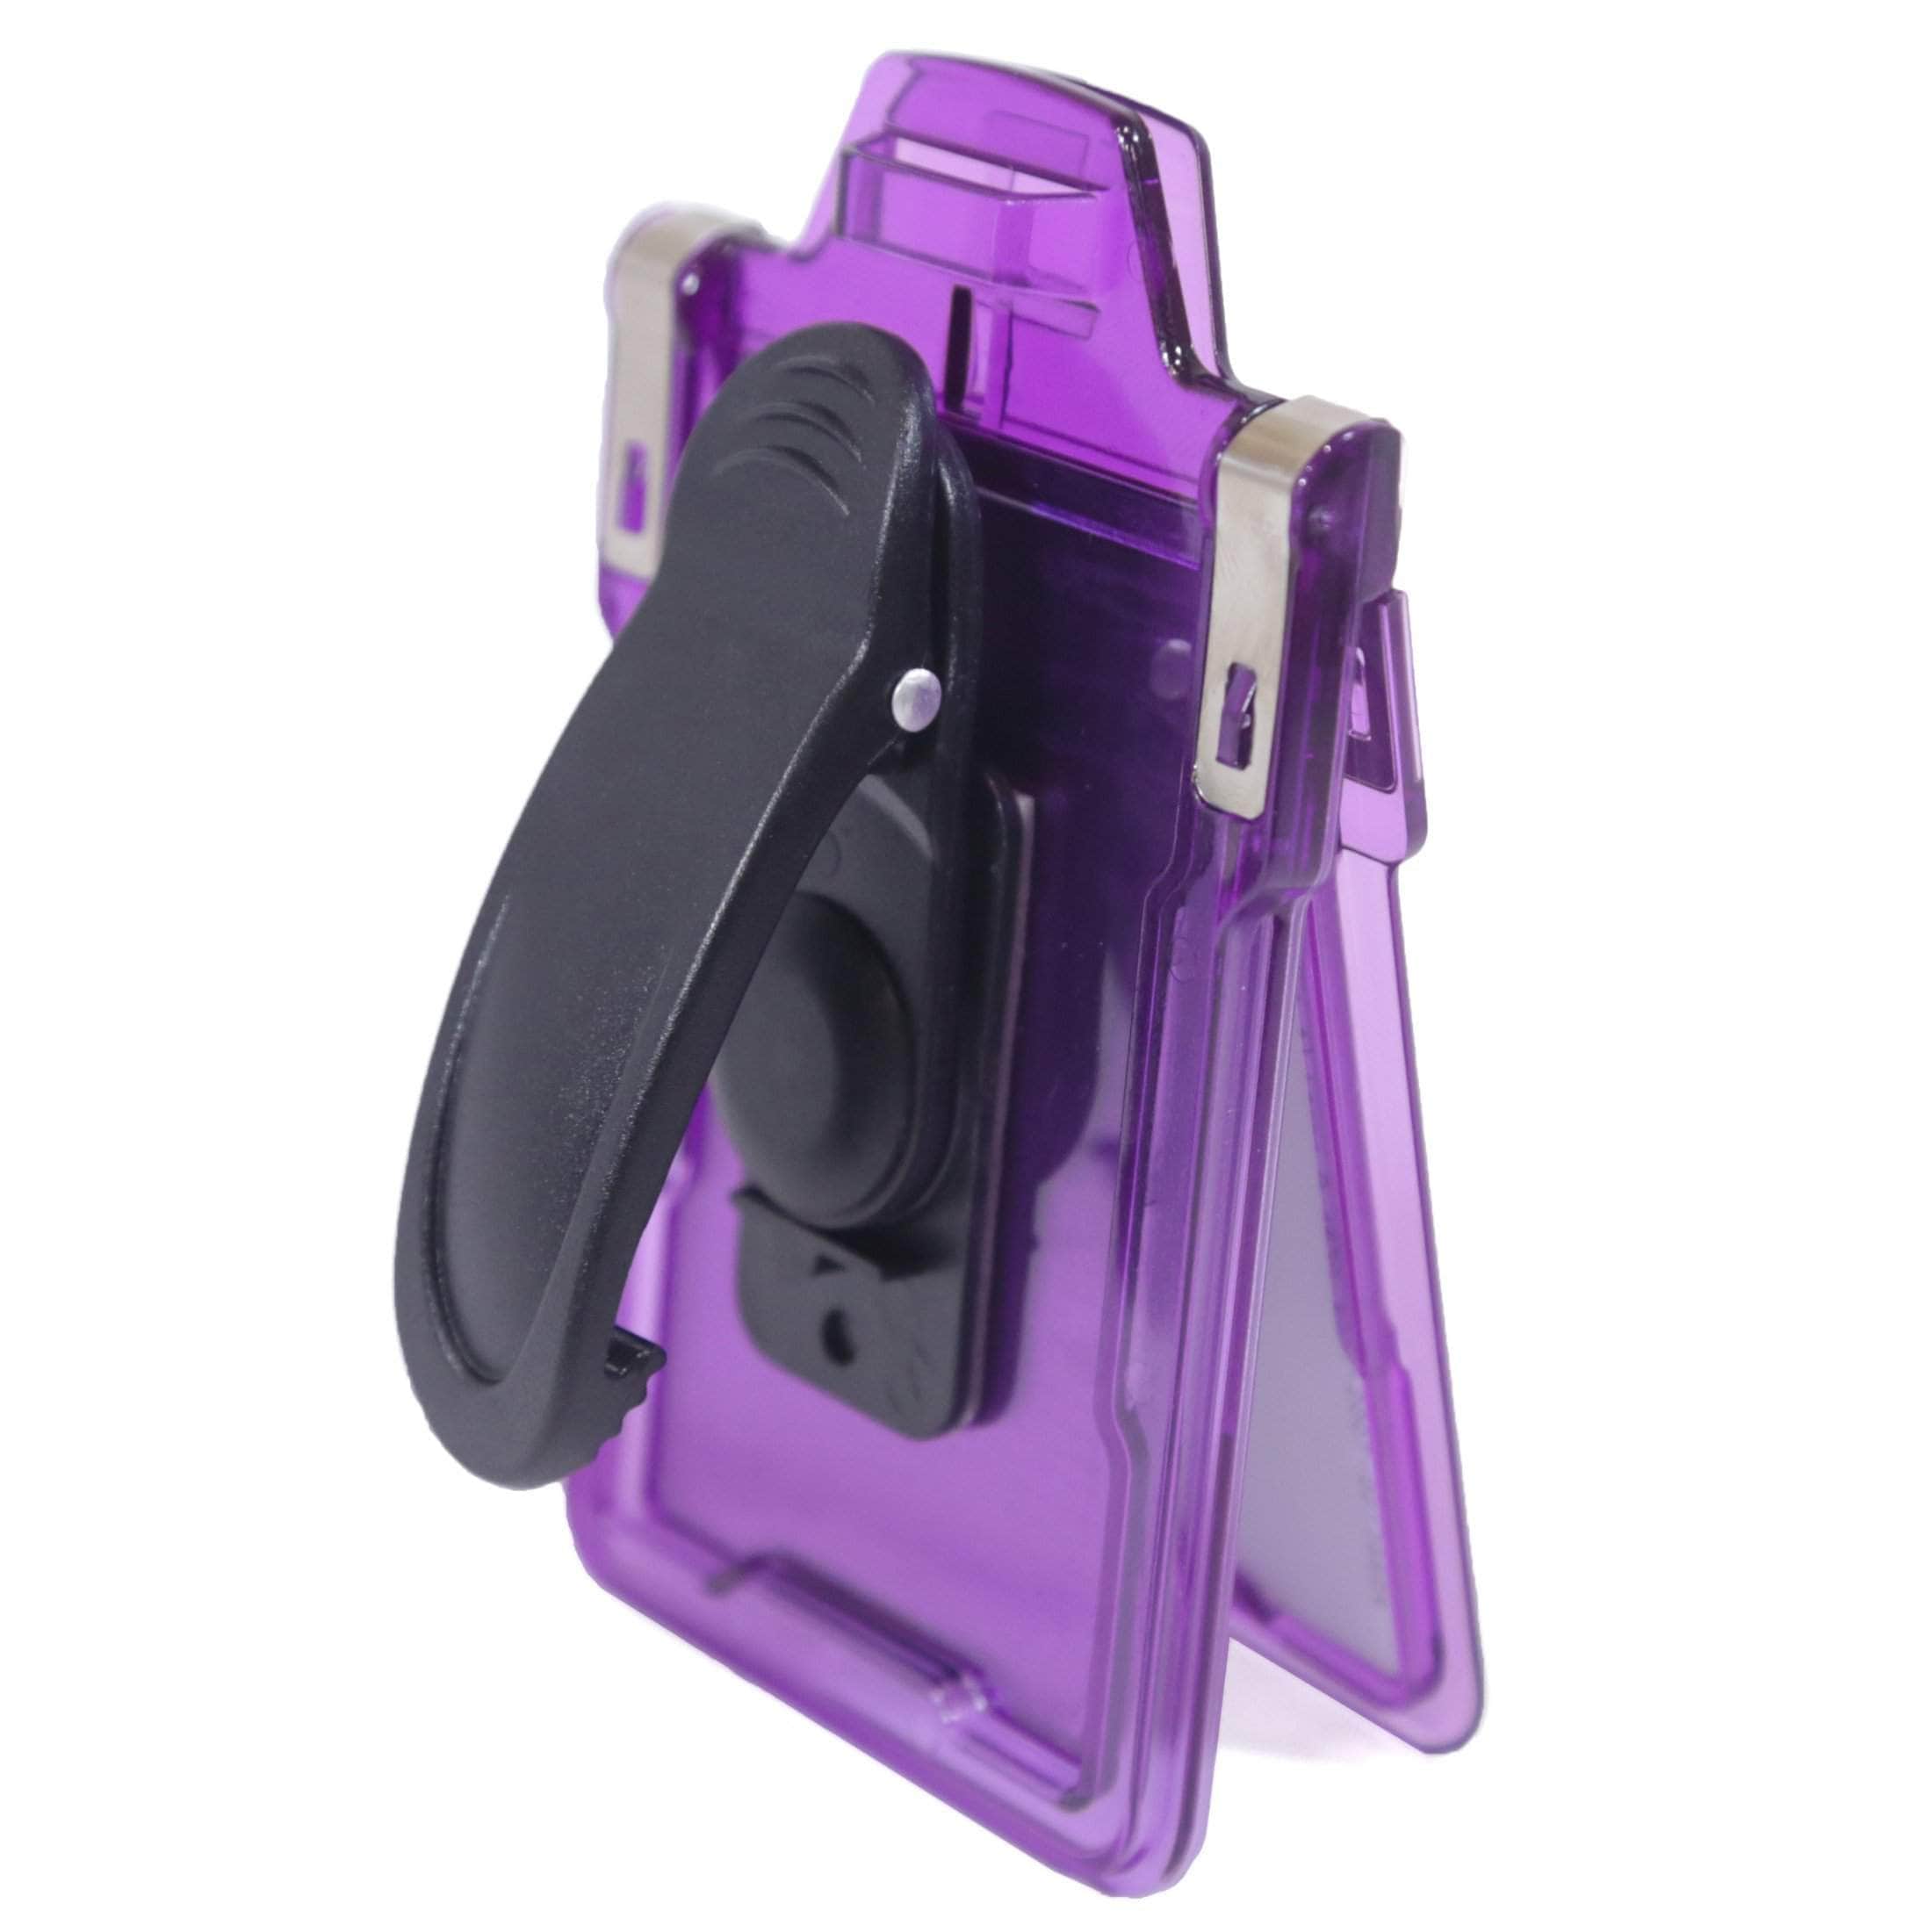 ID Stronghold Badgeholder Purple Secure Badge Holder Classic Vertical 1 Card Holder With Belt Clip